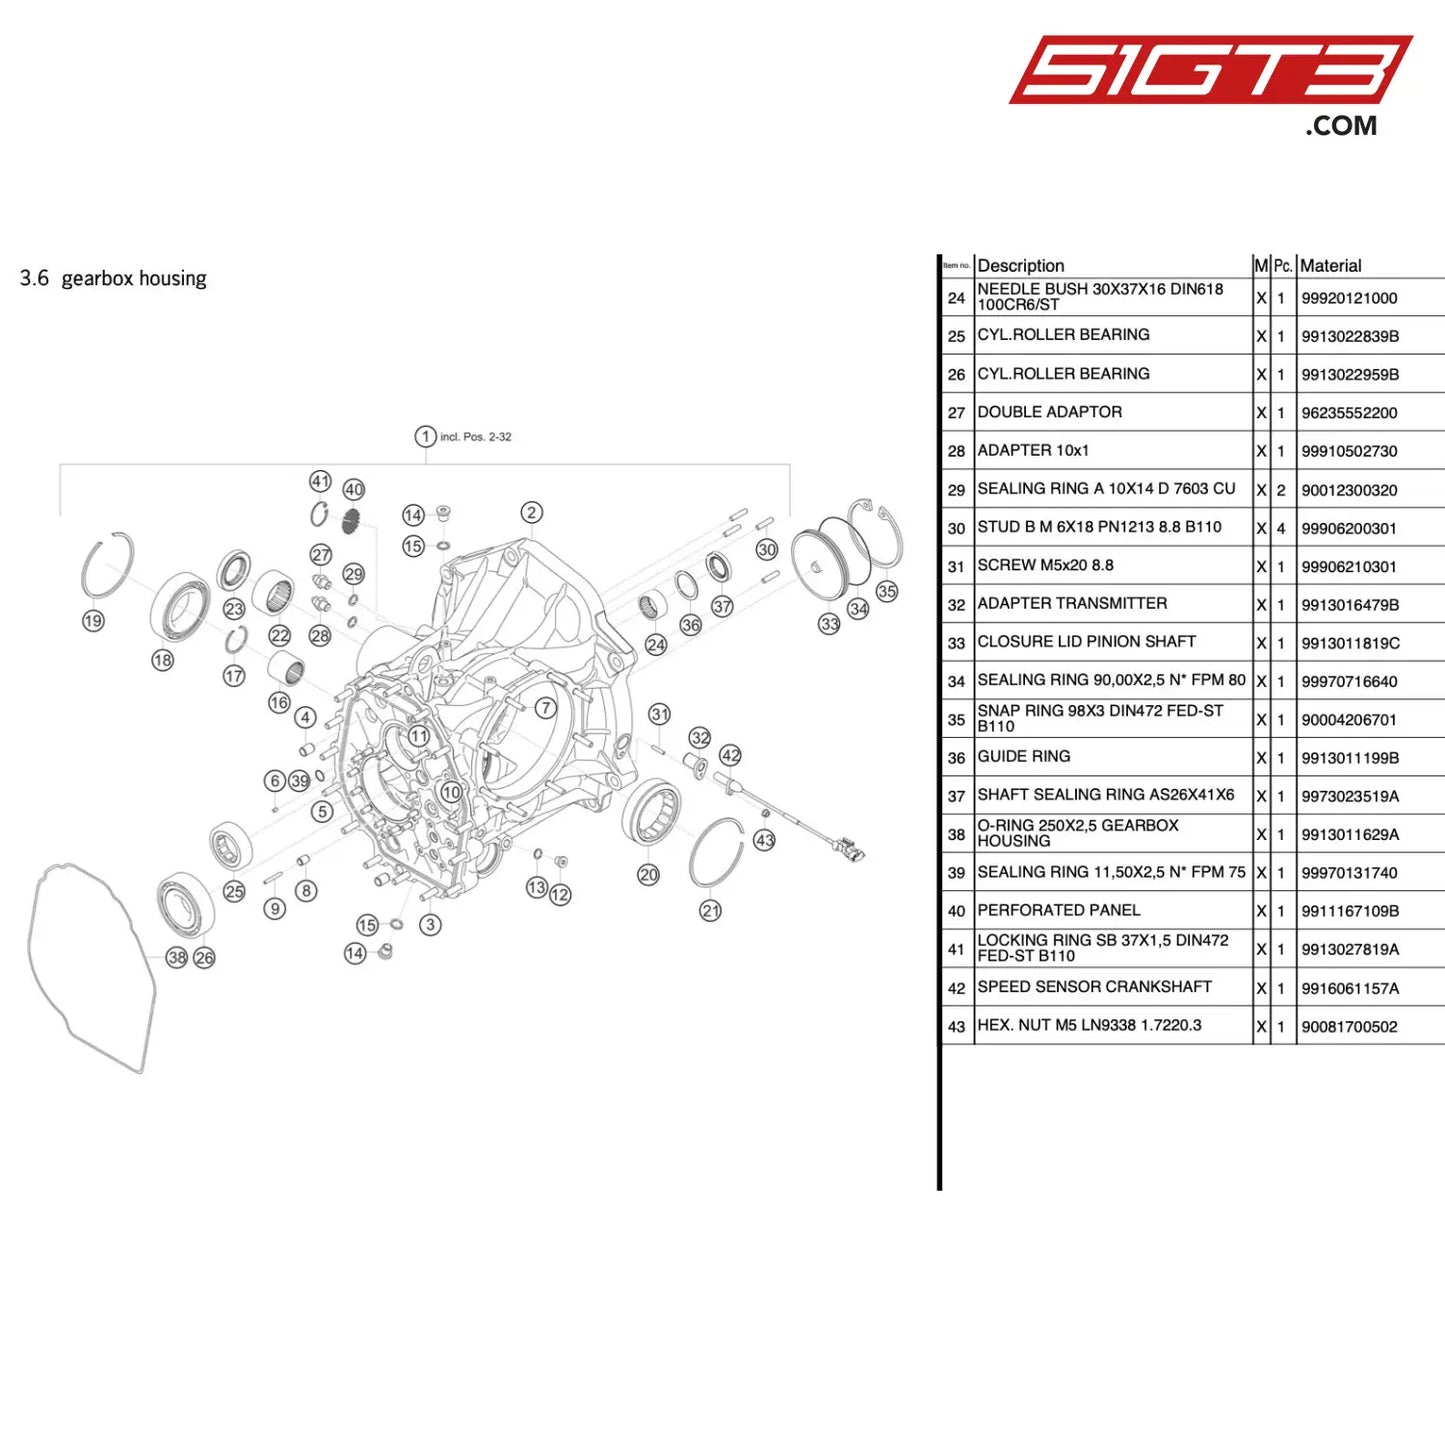 Stud B M 8X50 Pn1213 8.8 B110 - 99906201201 [Porsche 911 Gt3 R Type 991 (Gen 1)] Gearbox Housing